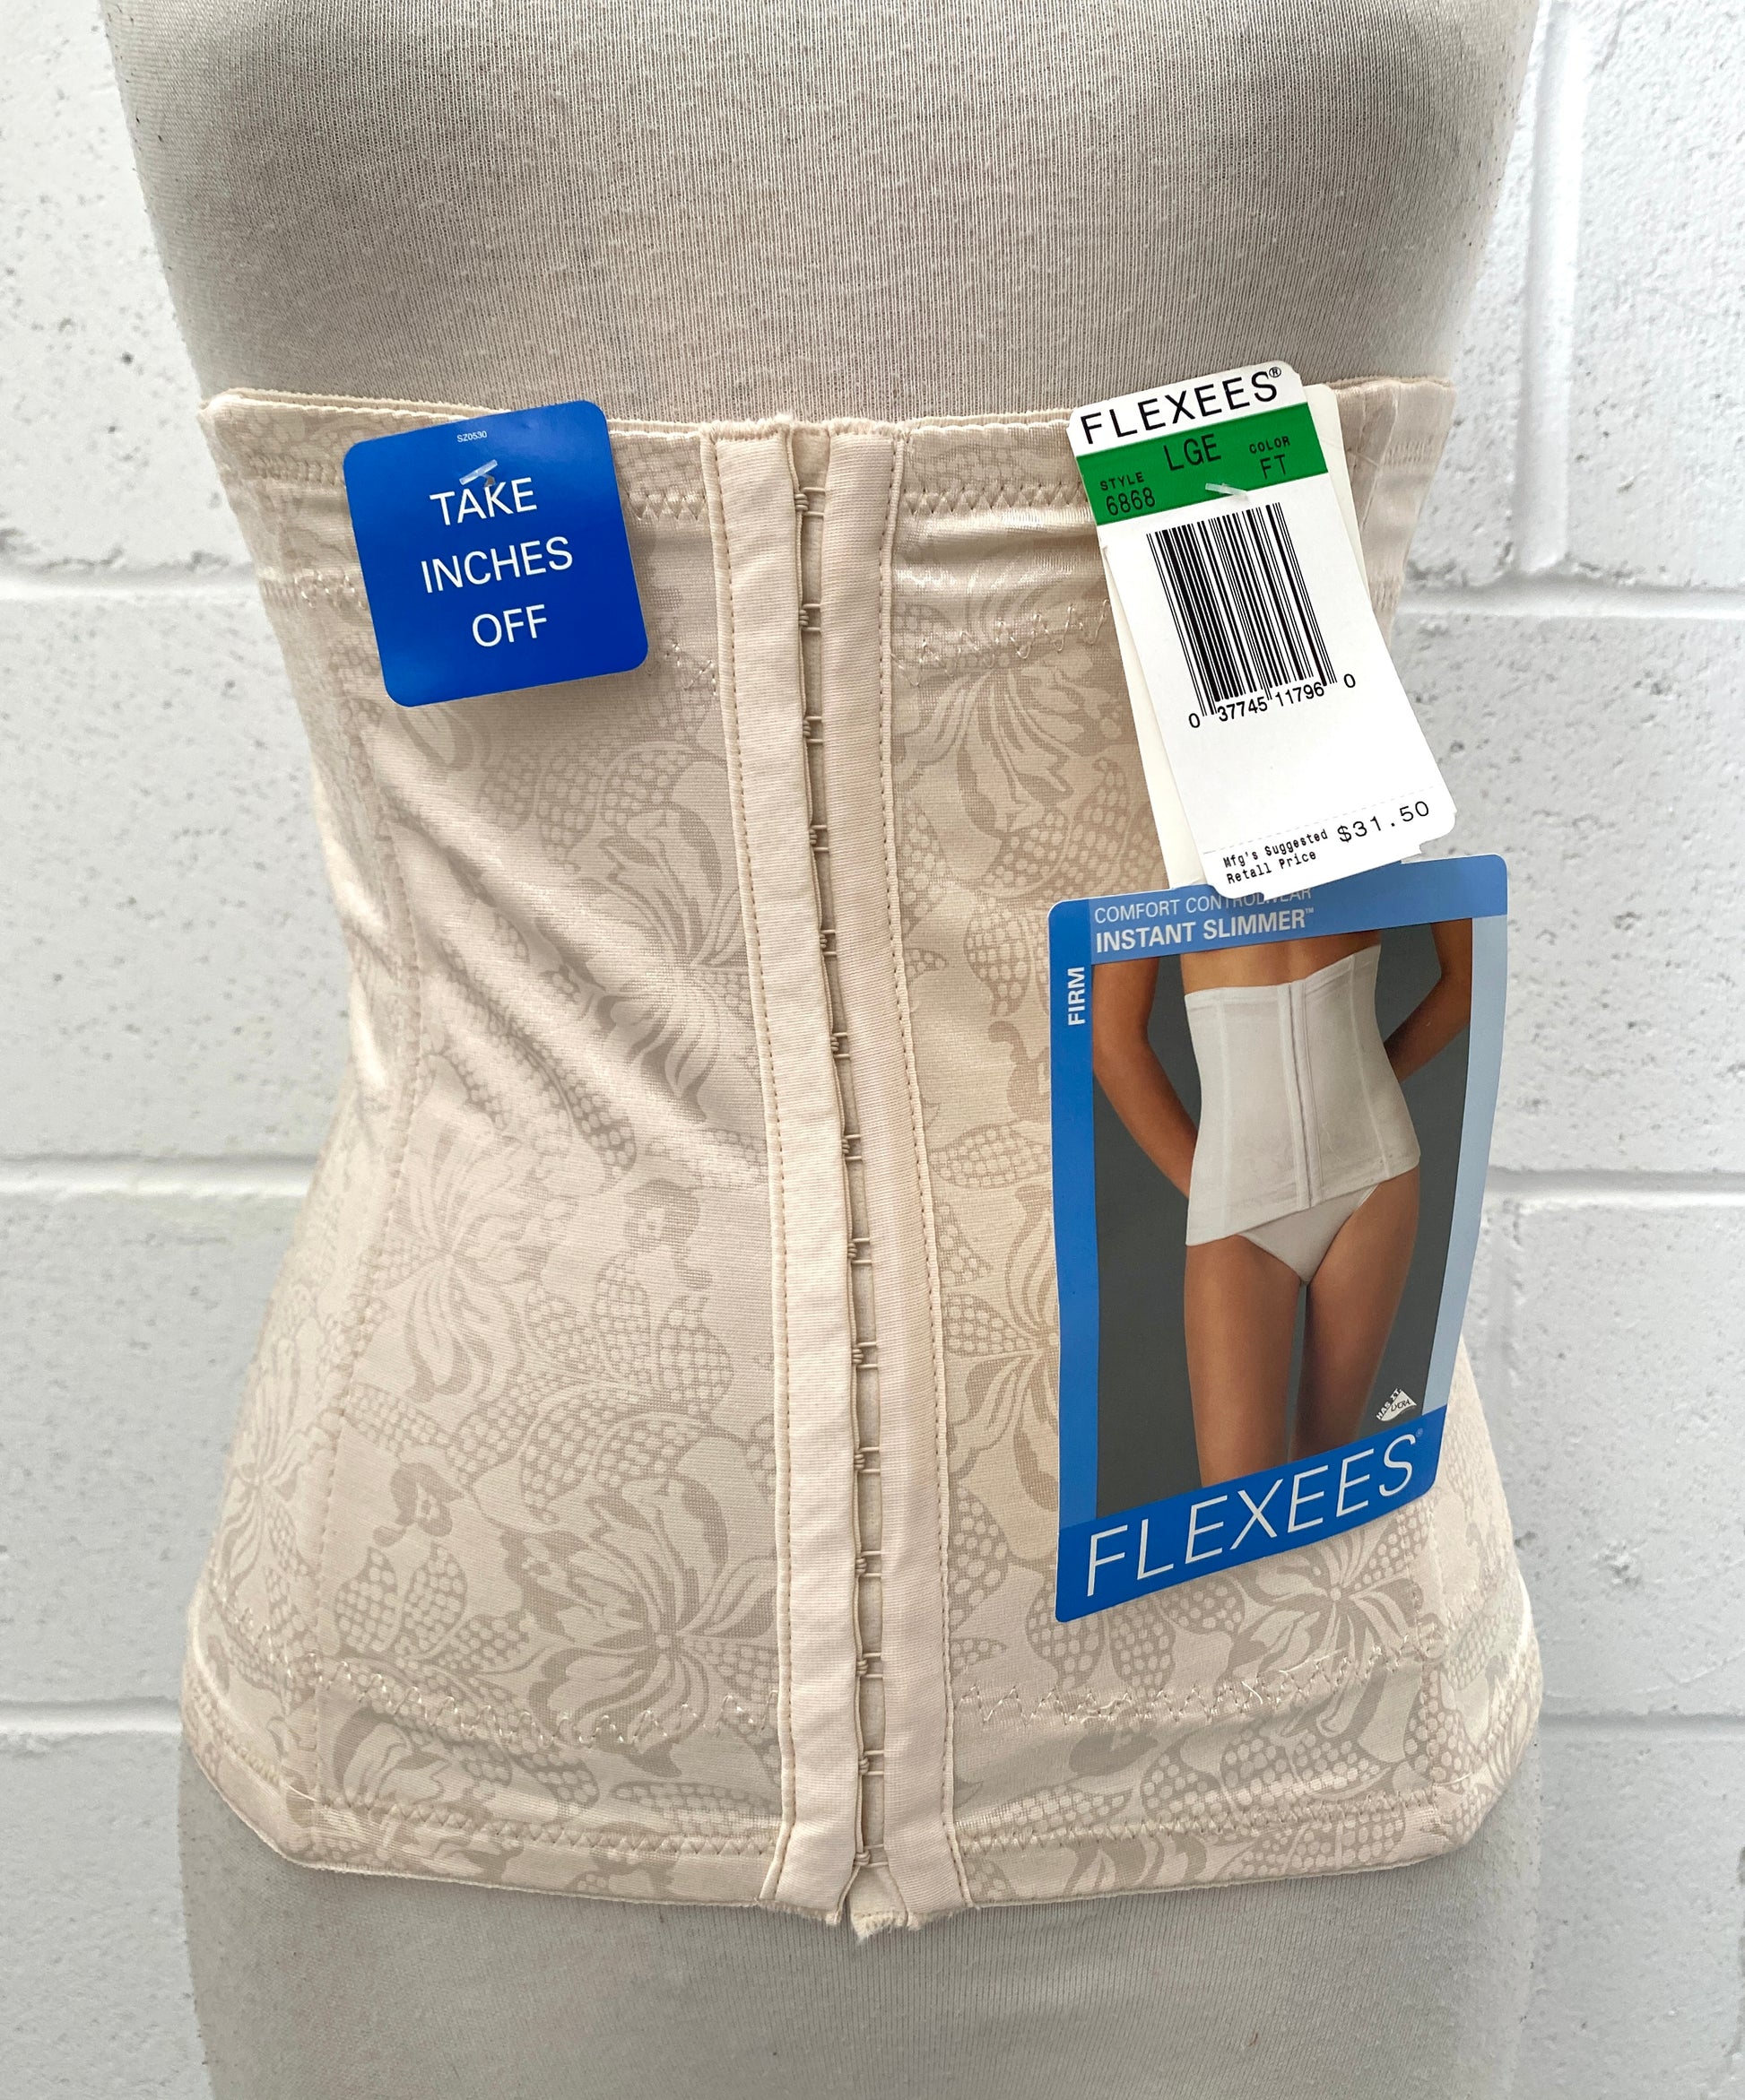 Flexees, Shop Flexees for underwear, shapewear and briefs